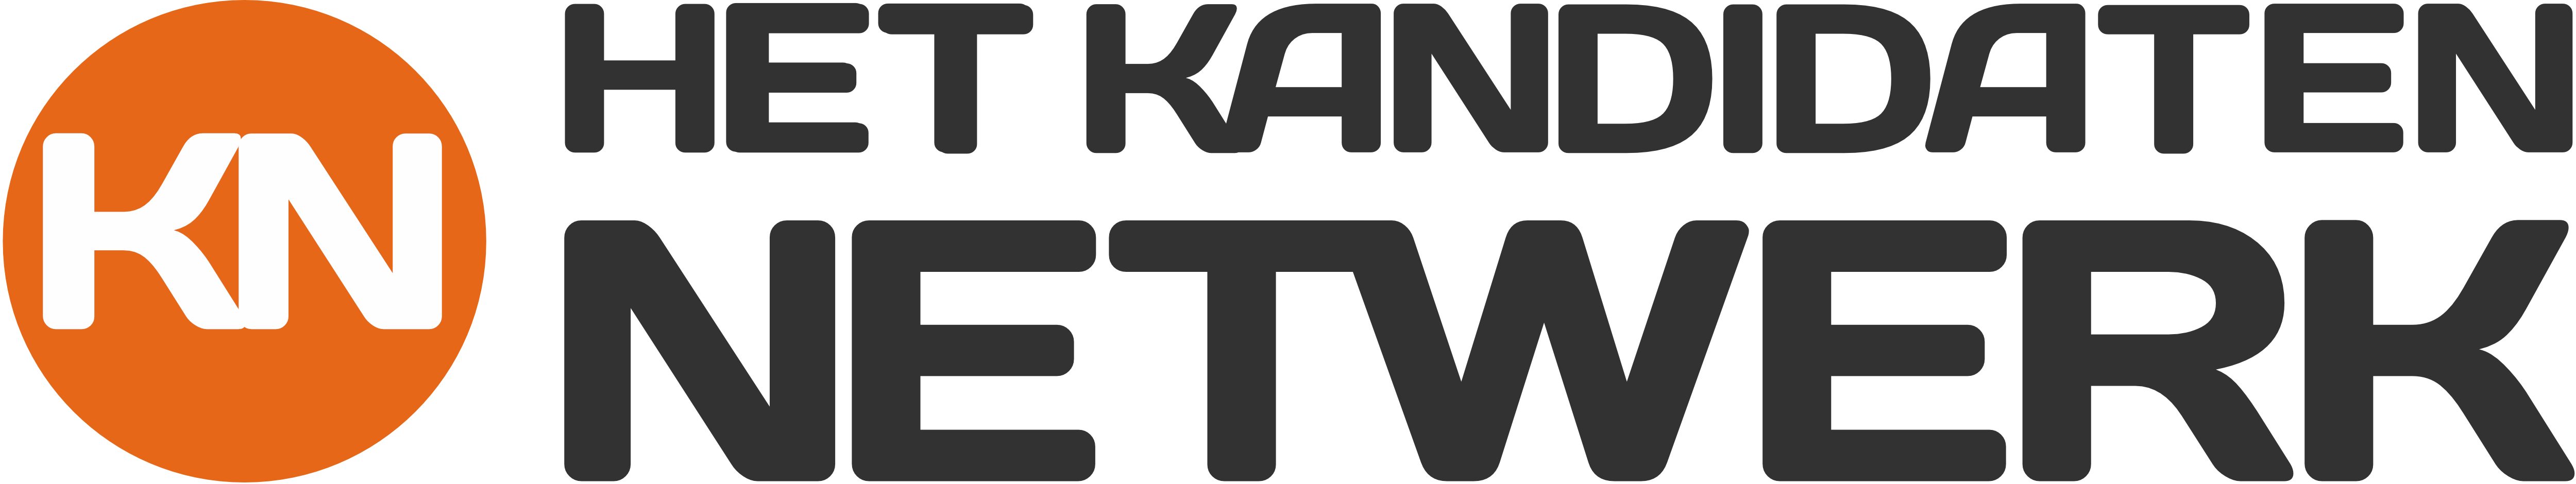 Logo KN grijs met icon oranje